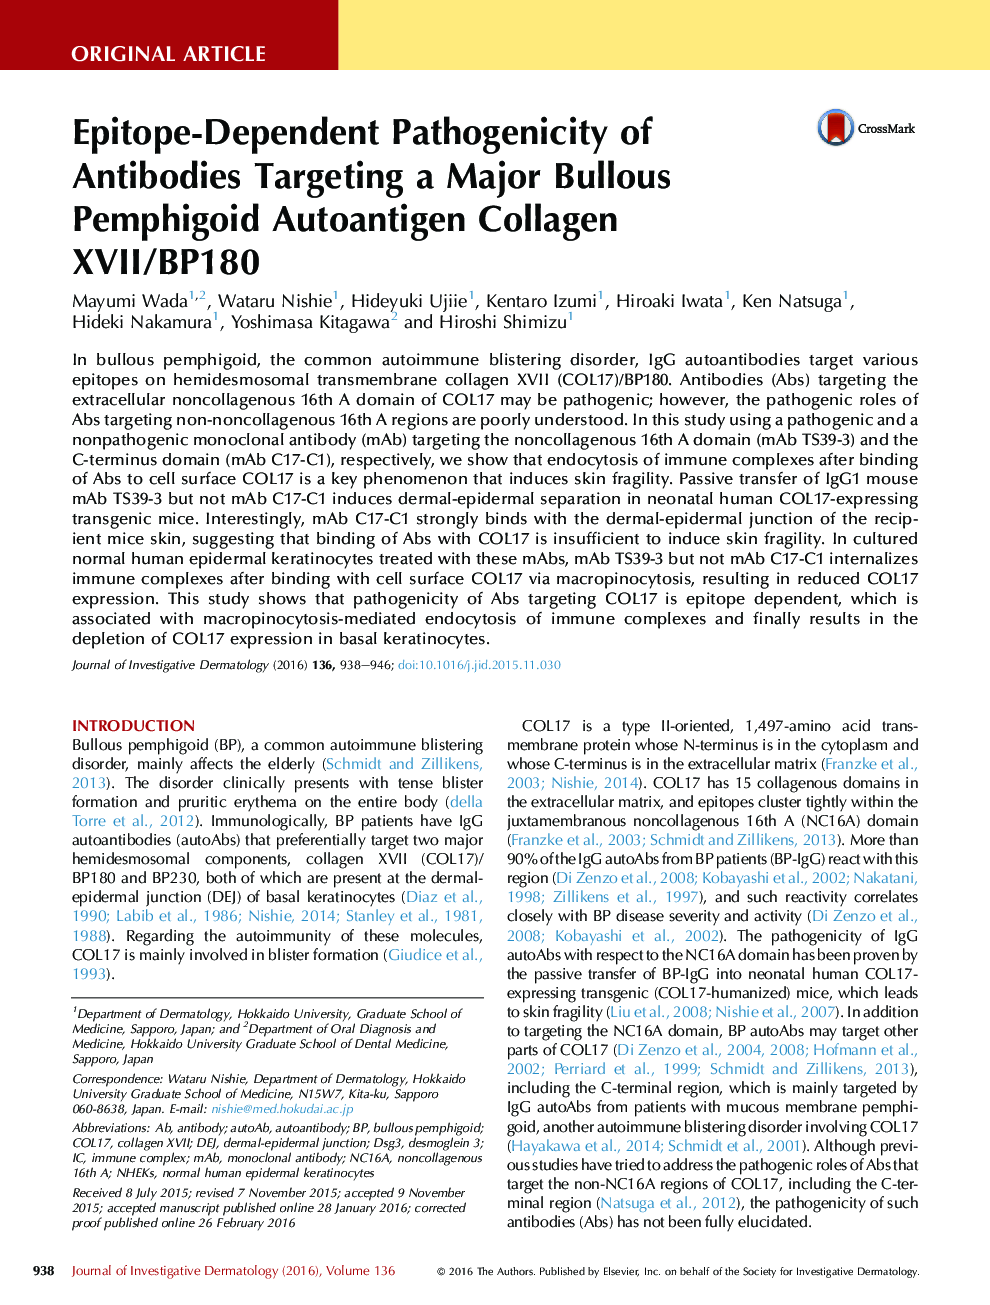 Original ArticleImmunology/InfectionEpitope-Dependent Pathogenicity of Antibodies Targeting a Major Bullous Pemphigoid Autoantigen Collagen XVII/BP180